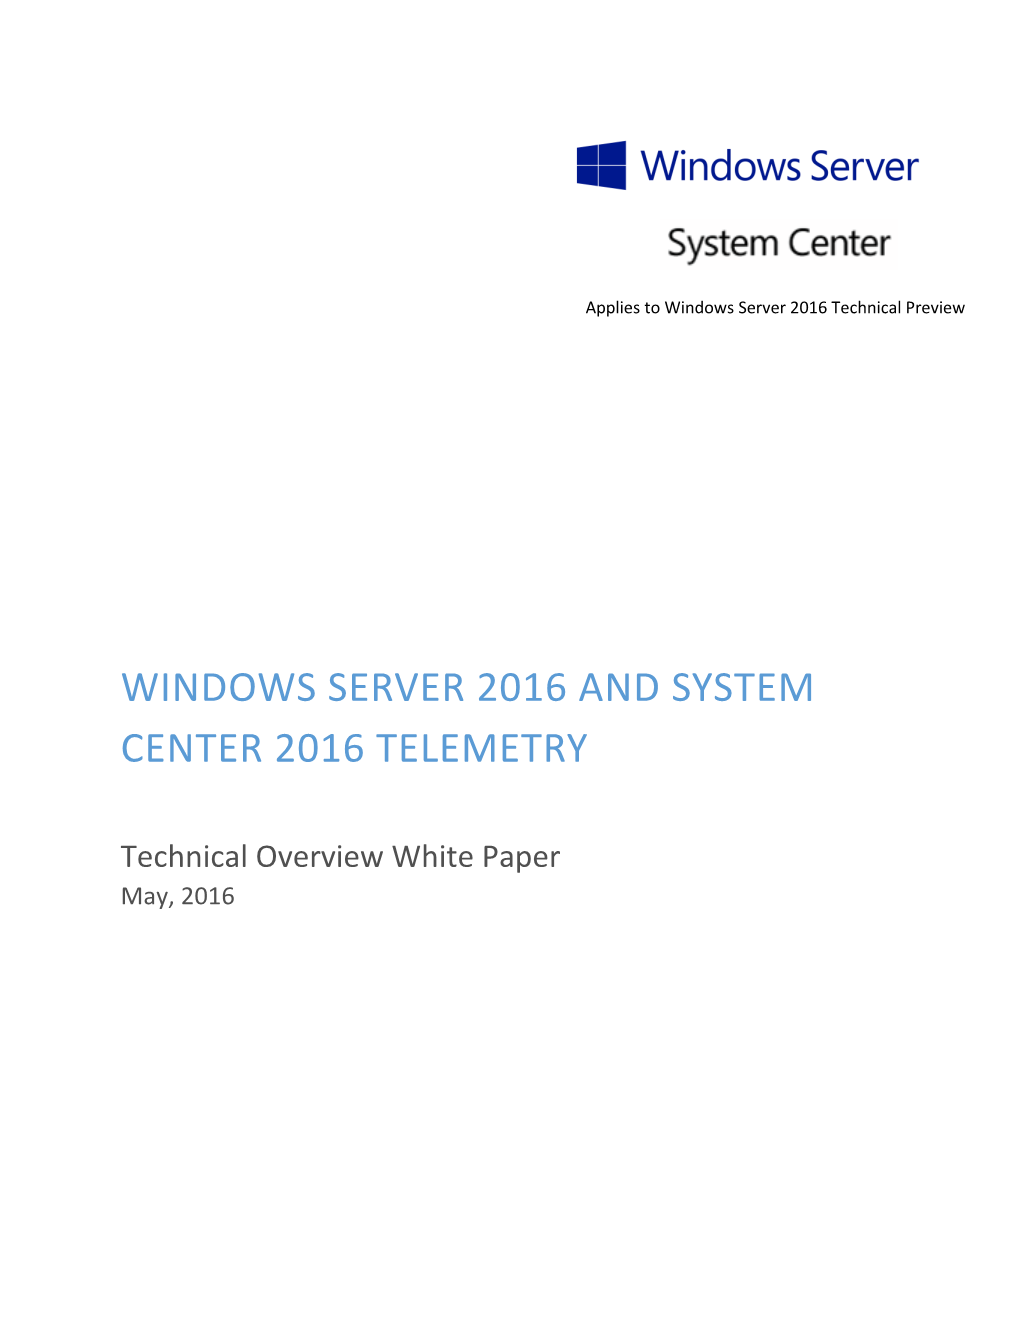 Windows Server and System Center 2016 Telemetry Whitepaper